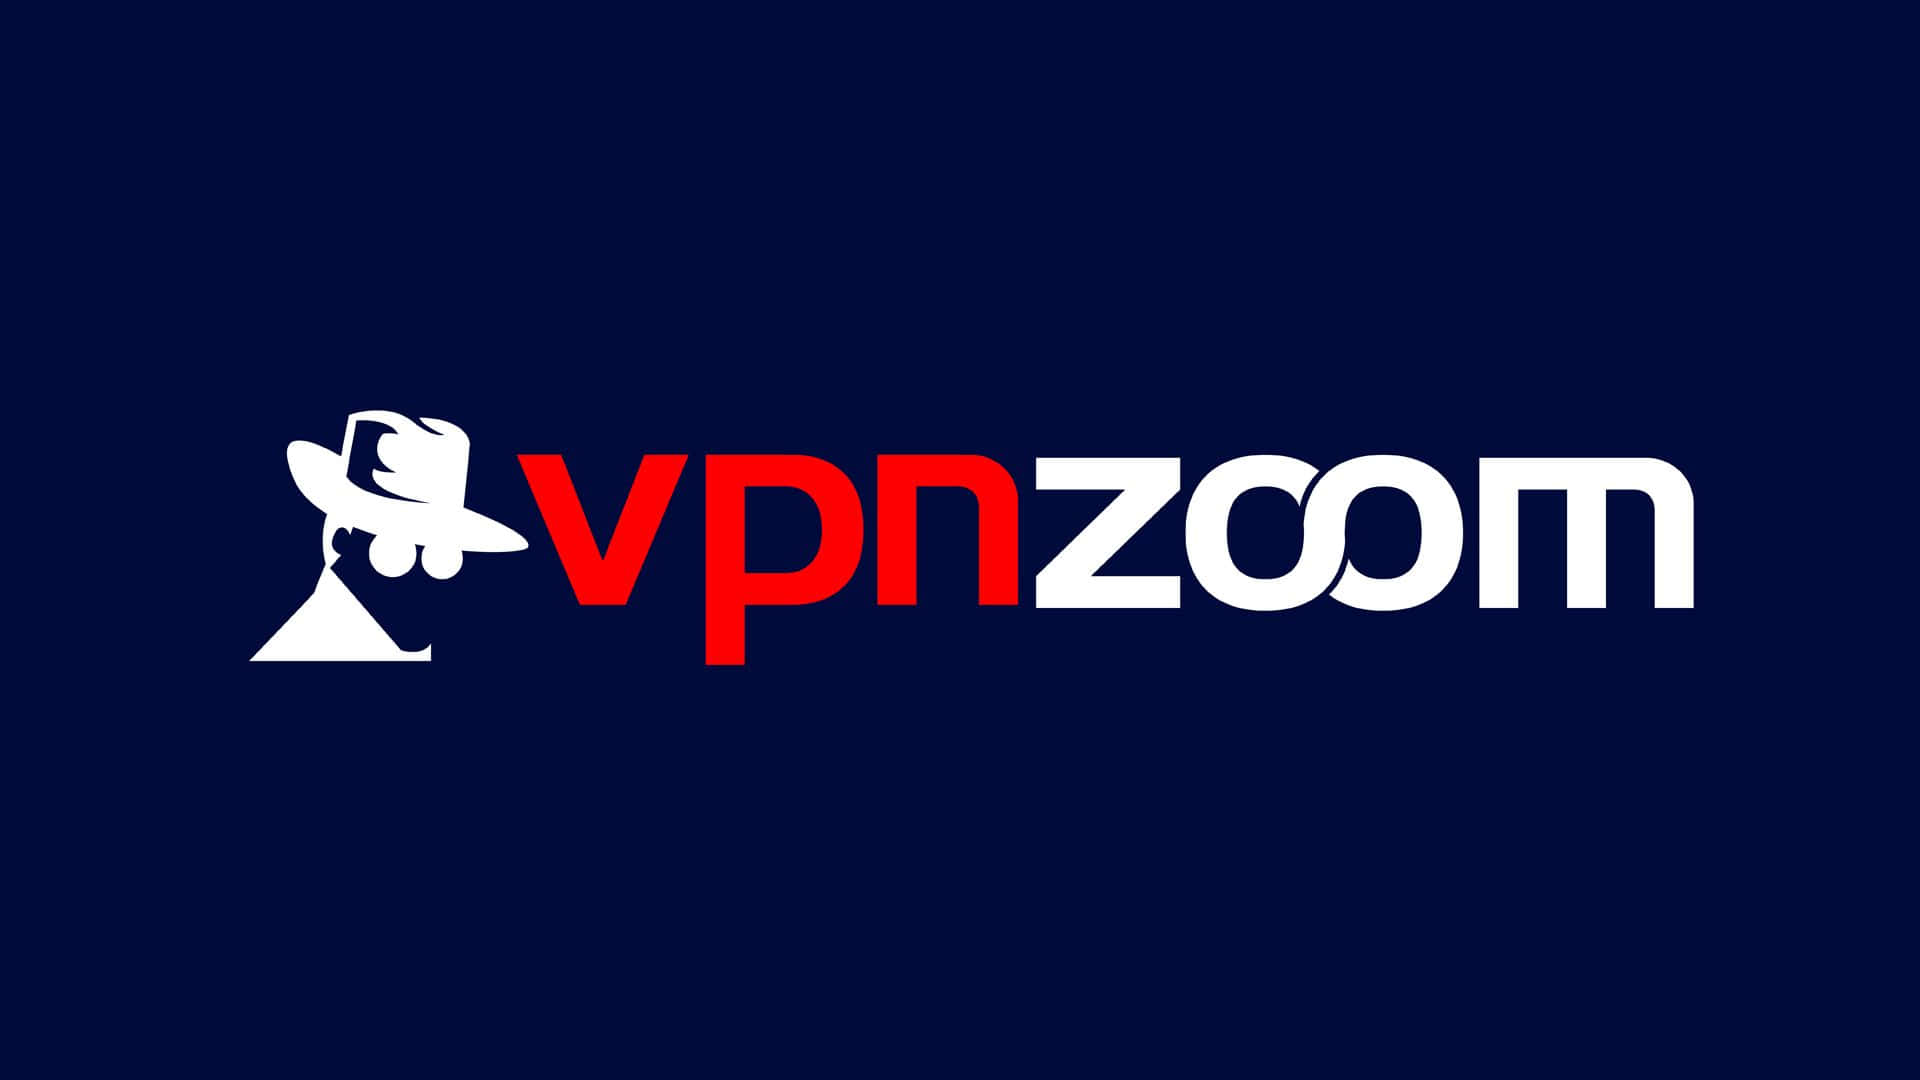 Vpnzoom Logo On A Dark Blue Background Wallpaper